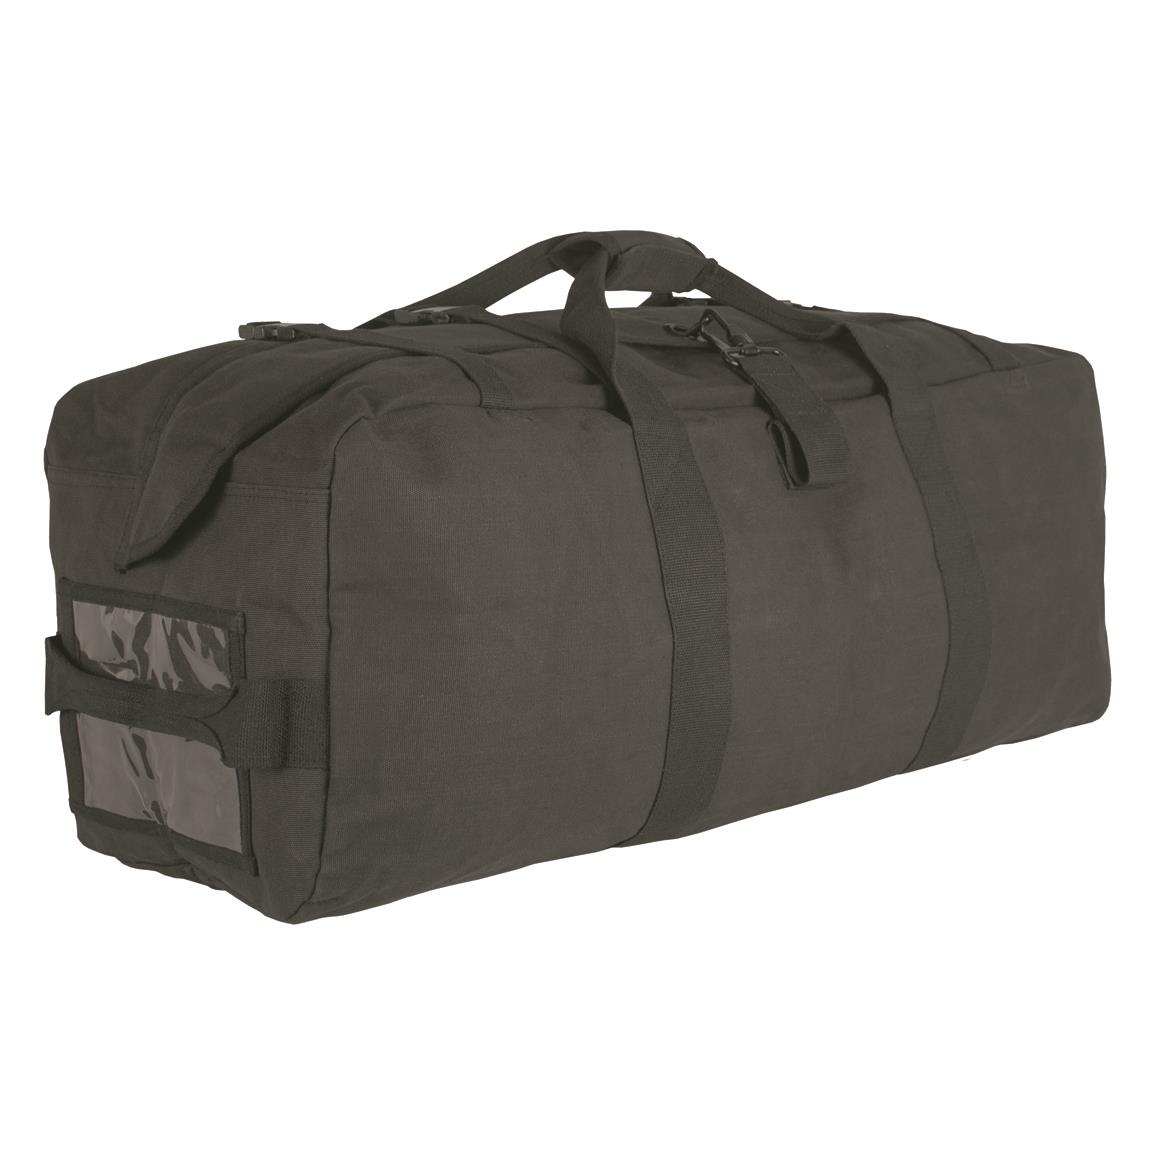 Used Dutch Military Surplus Large Duffel Bag, Olive Drab - 216919 ...